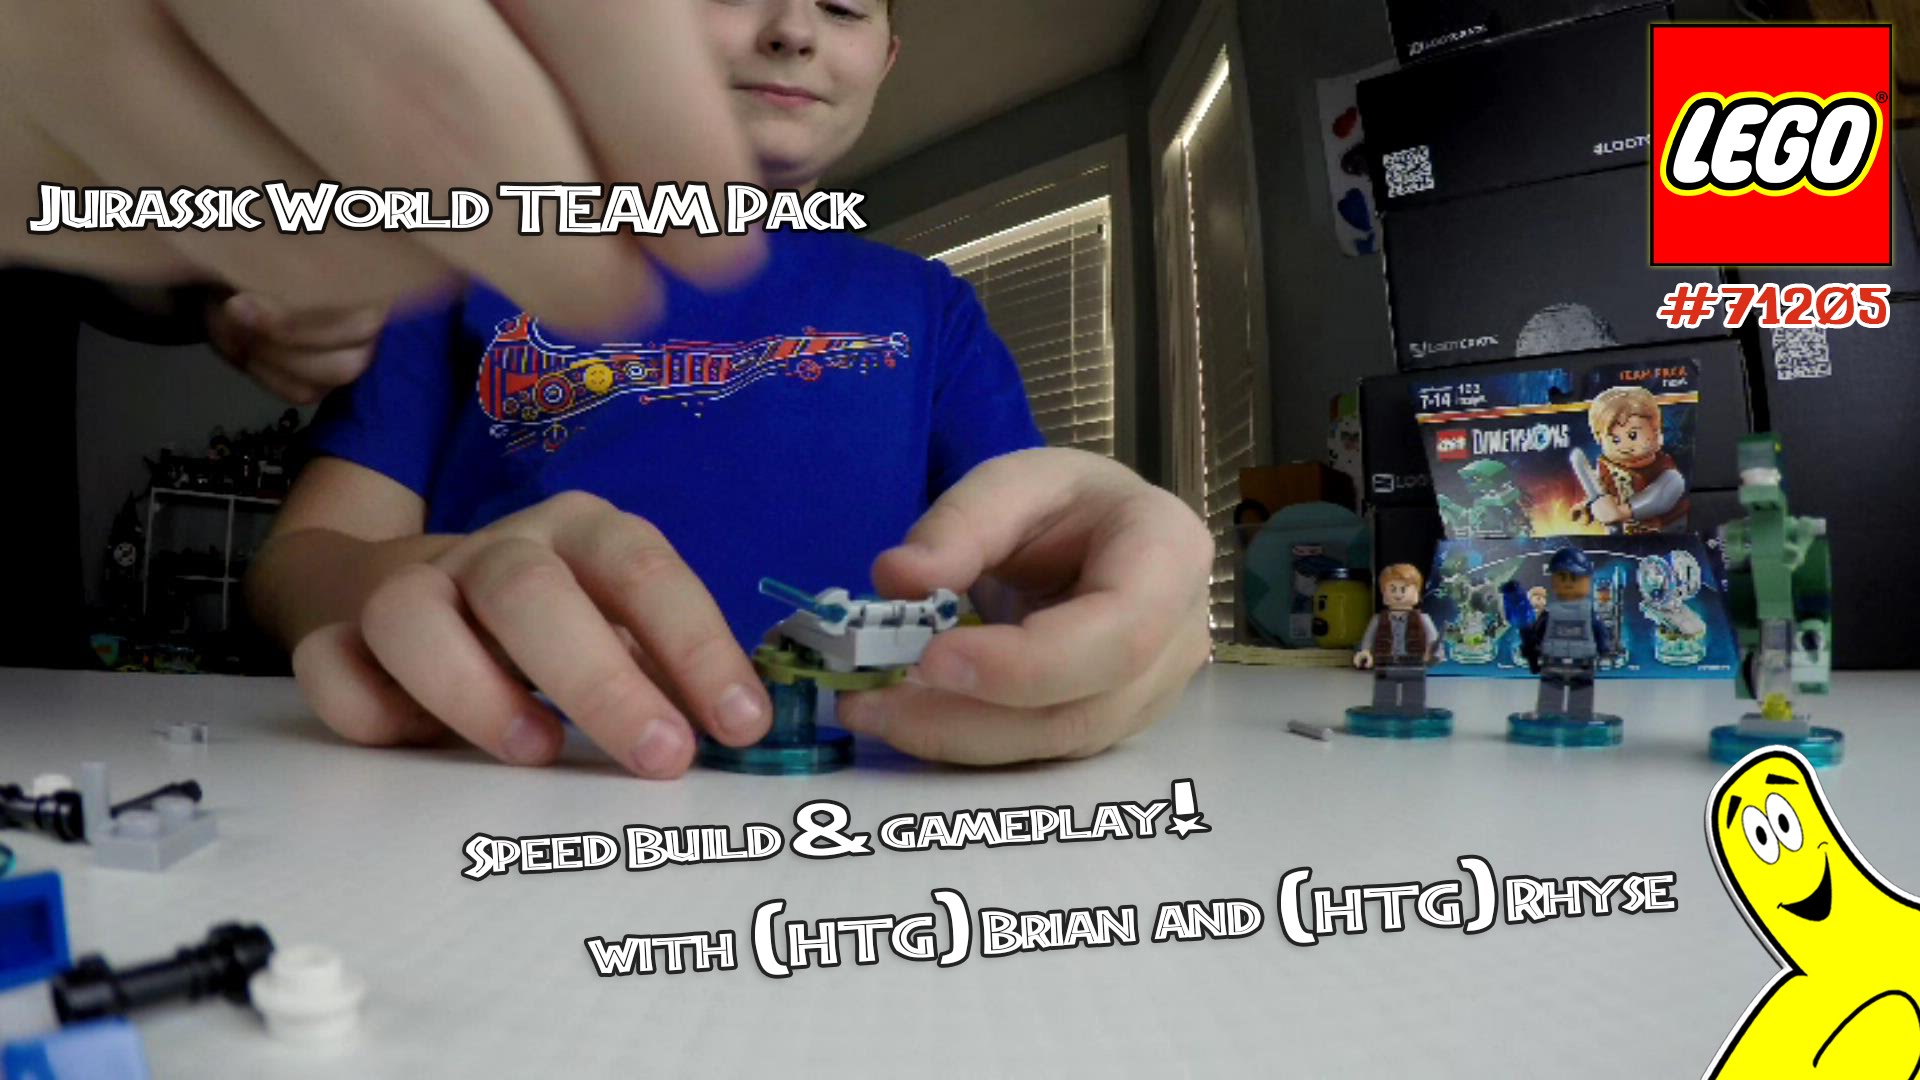 Lego Dimensions: Jurassic World Team Pack #71205 Speed Build & Gameplay – HTG